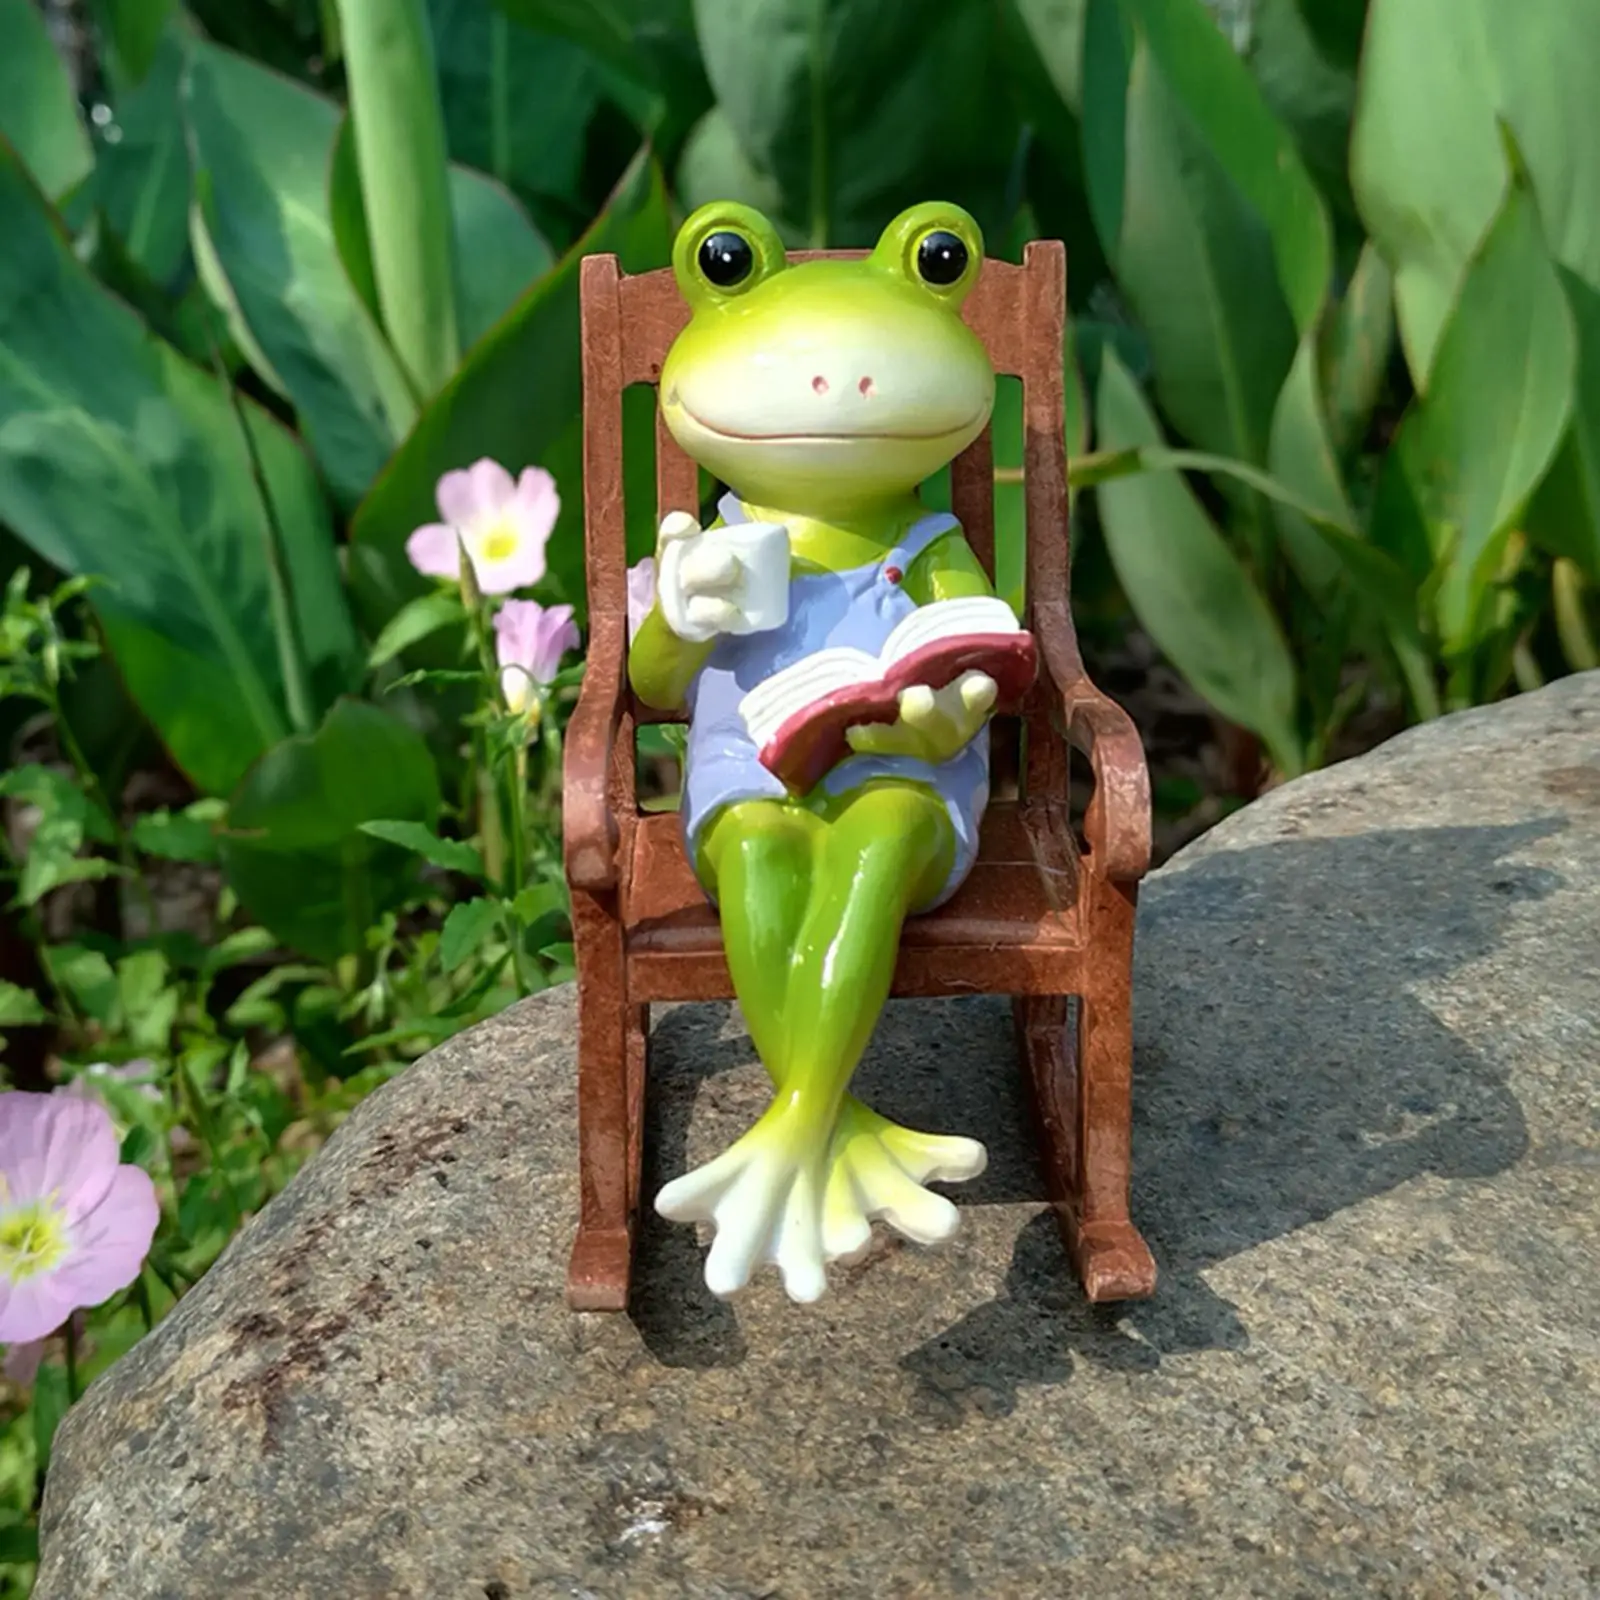 Animal Collectible Figurines Novelty Crafts Garden Frog Statues Frog Figurine for Tabletop Yard Indoor Outdoor Fairy Garden Home